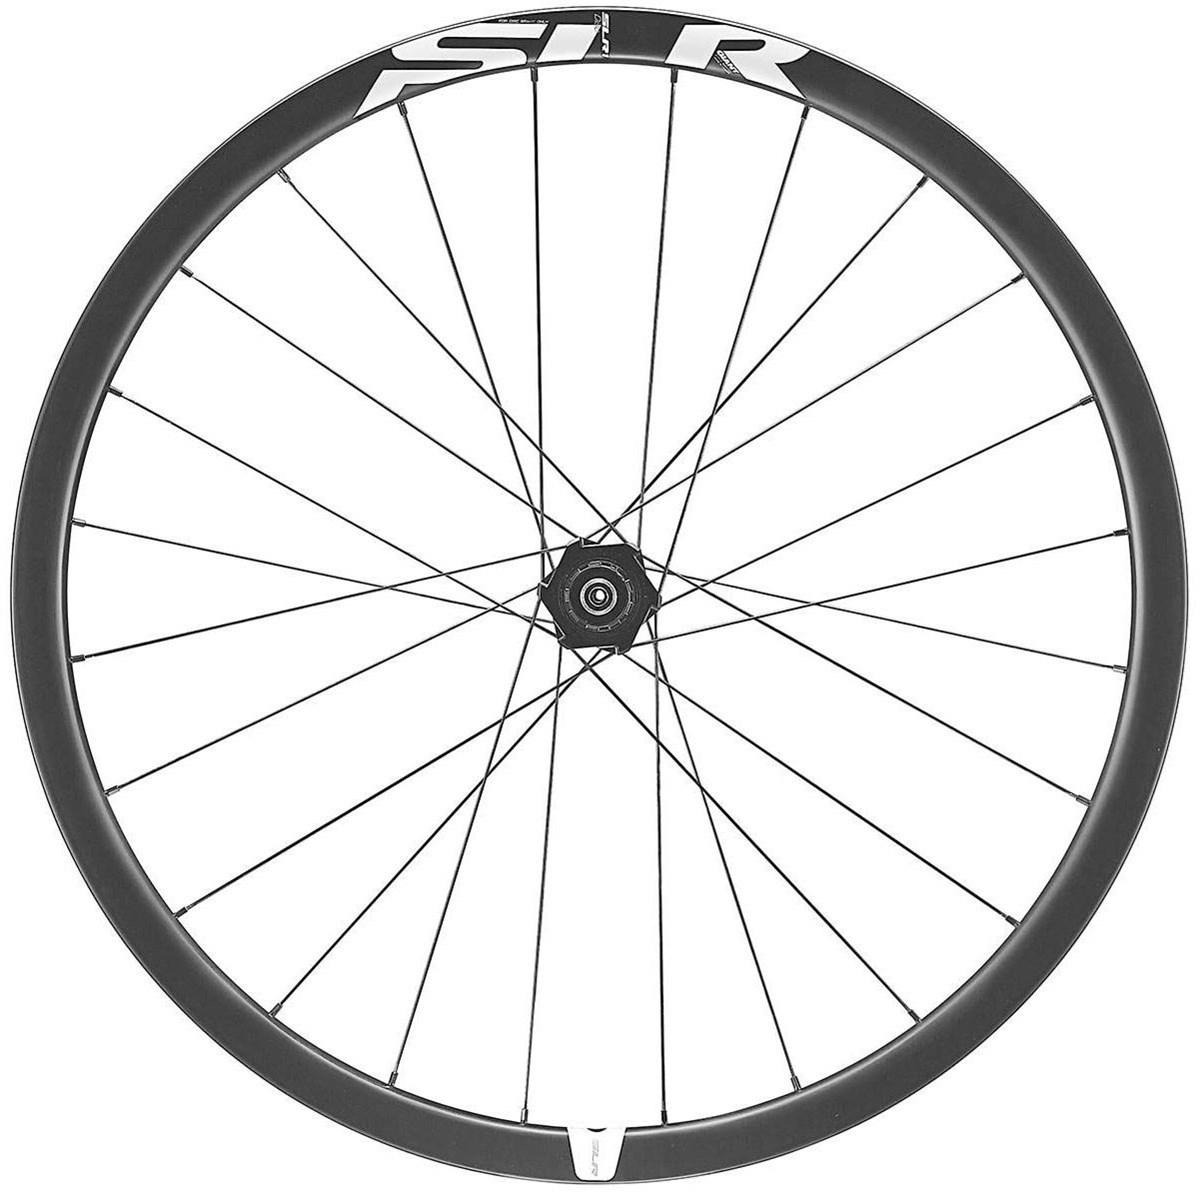 Giant SLR 1 Disc Wheel System (Rear Wheel) product image